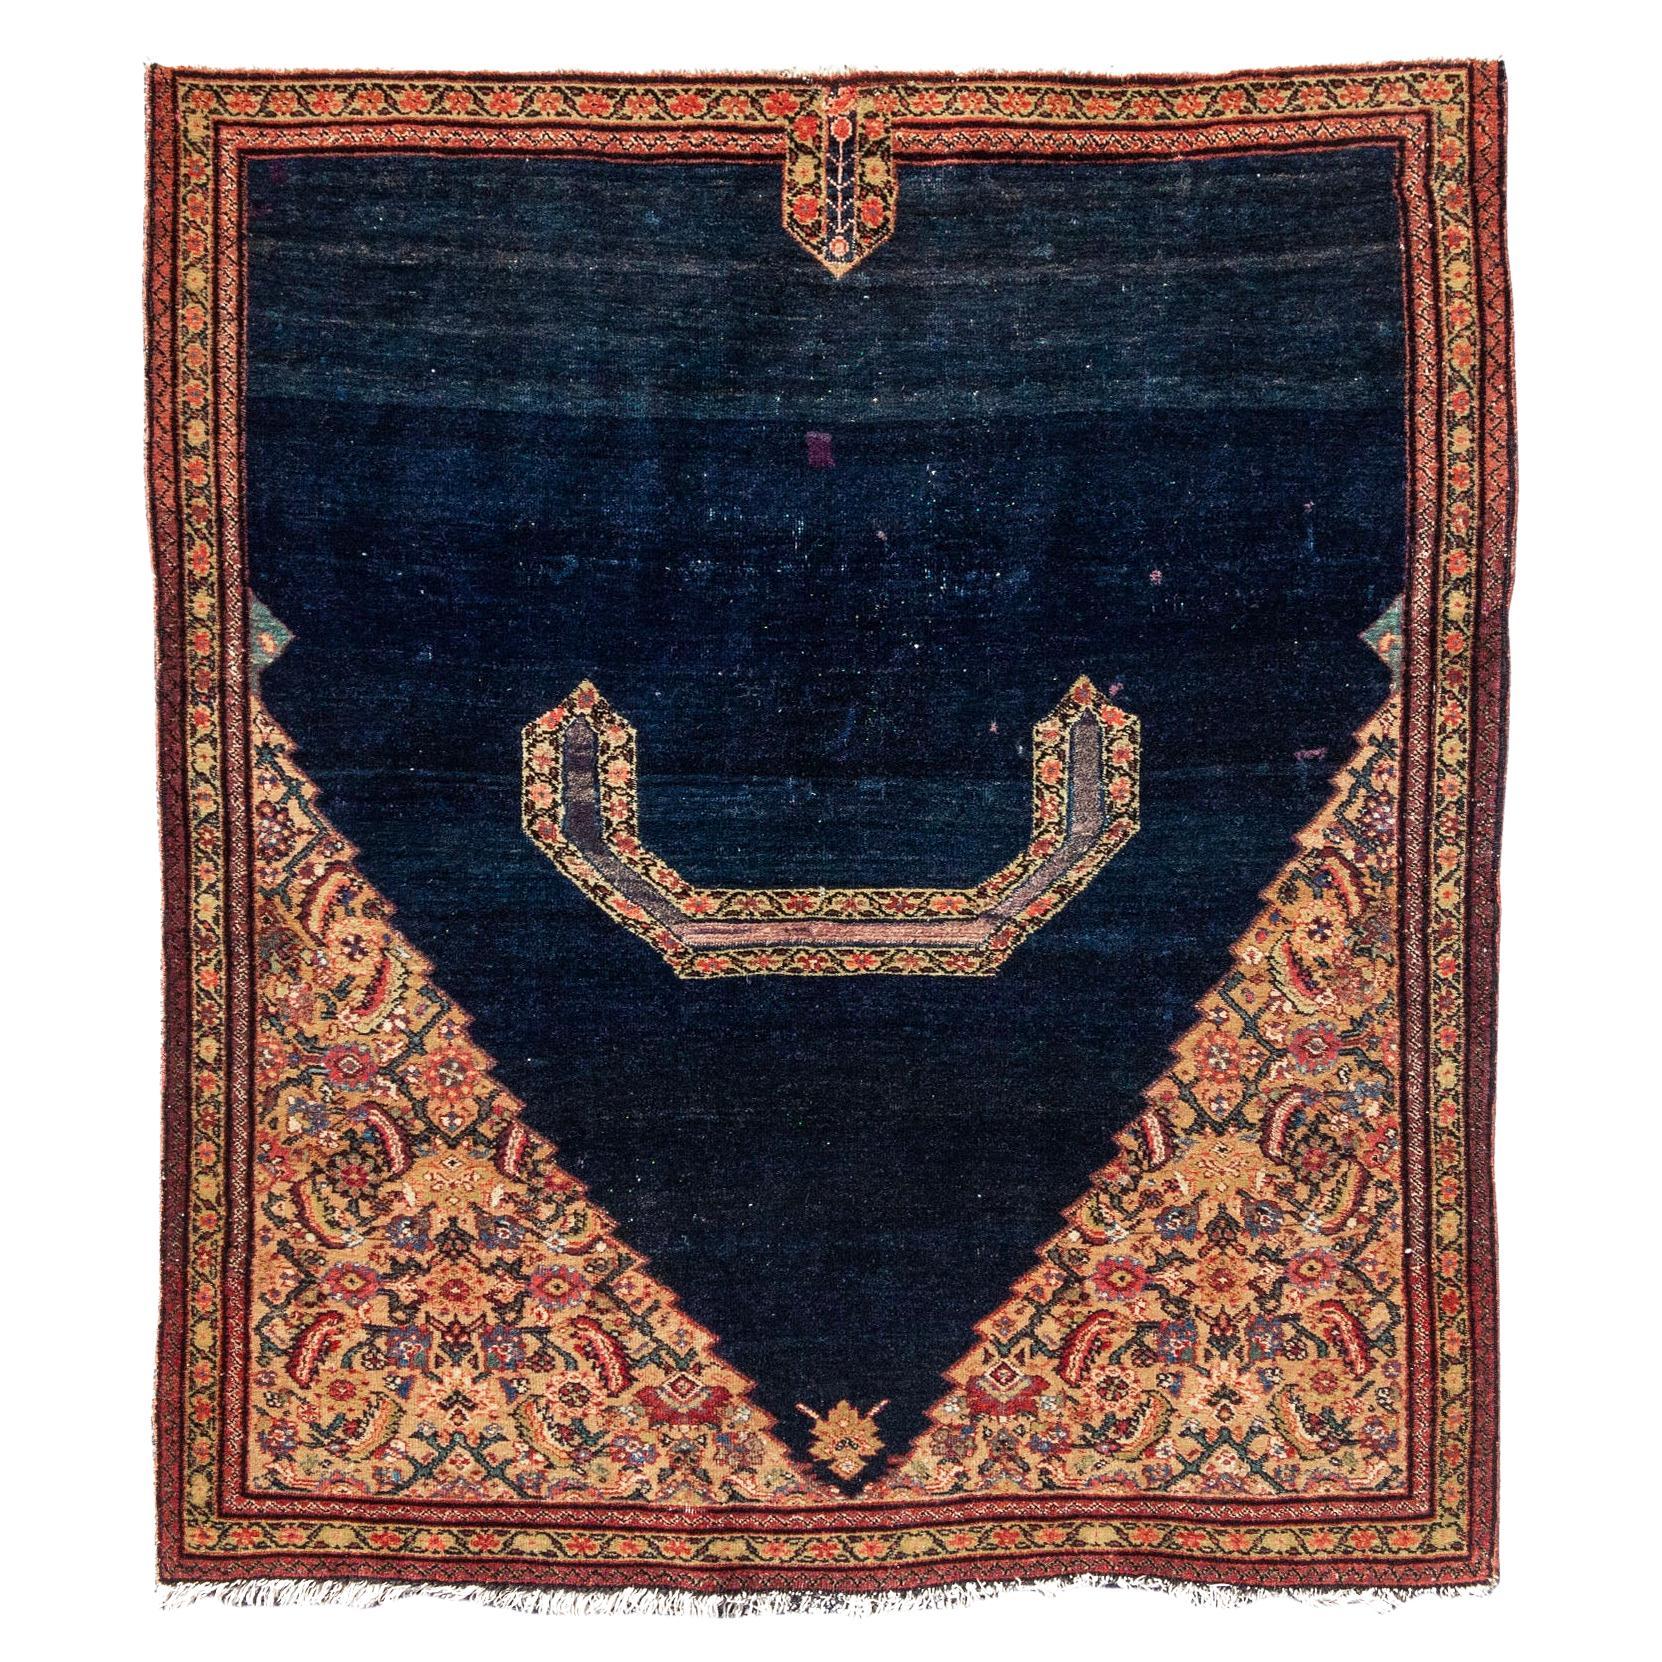 Antiker persischer Fereghan-Satteldecke-Deckel, spätes 19. Jahrhundert